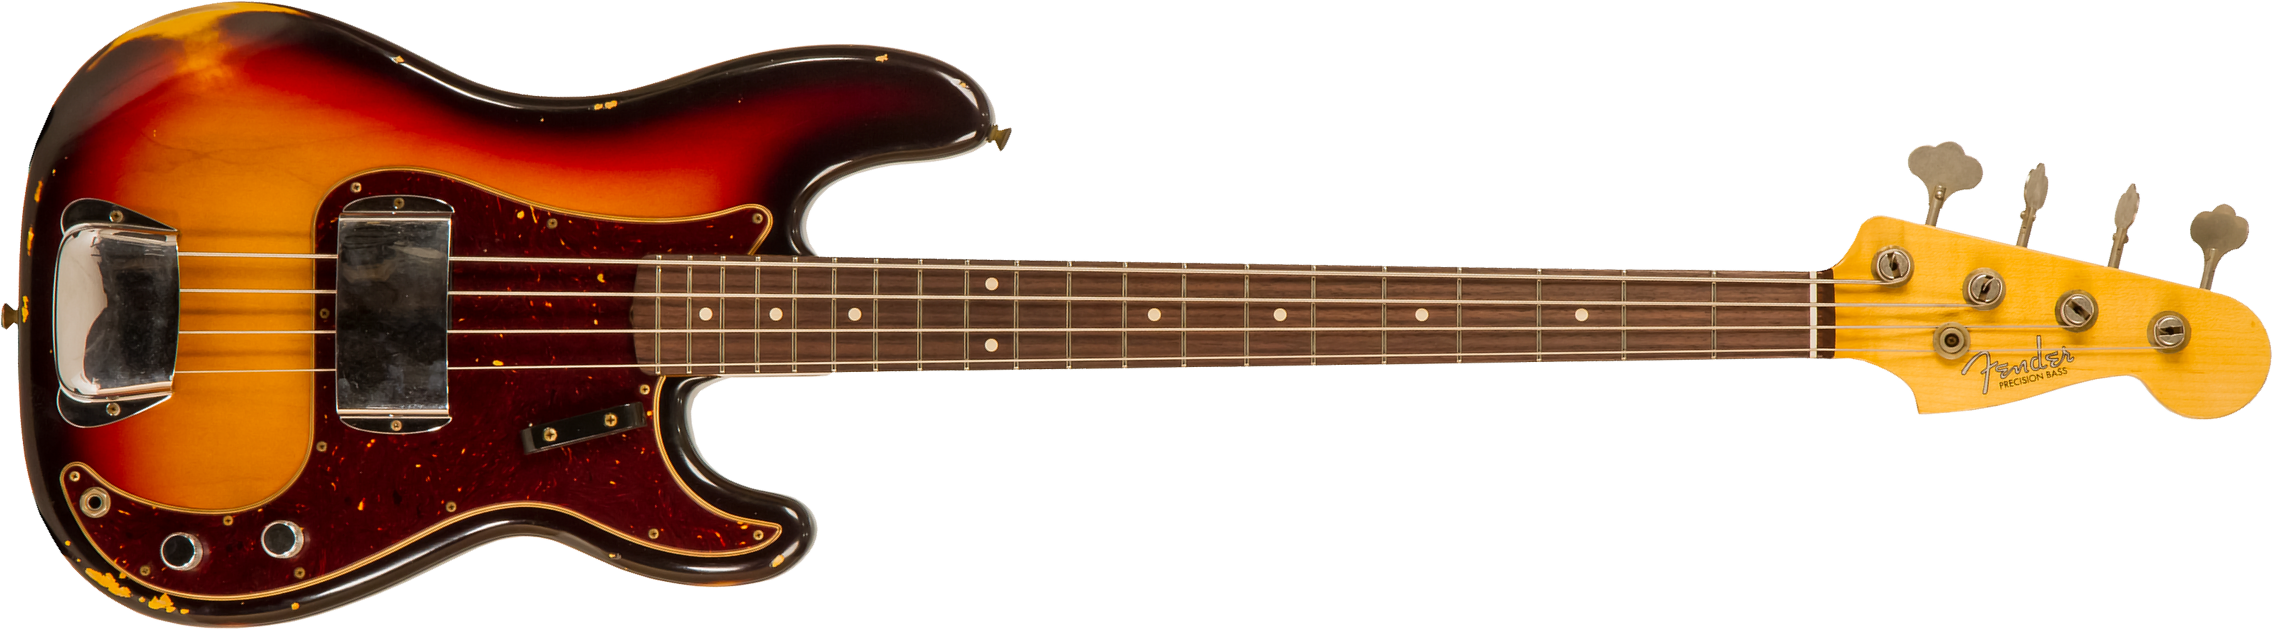 Fender Custom Shop Precision Bass 1961 Rw #cz556533 - Relic 3-color Sunburst - Solid body elektrische bas - Main picture